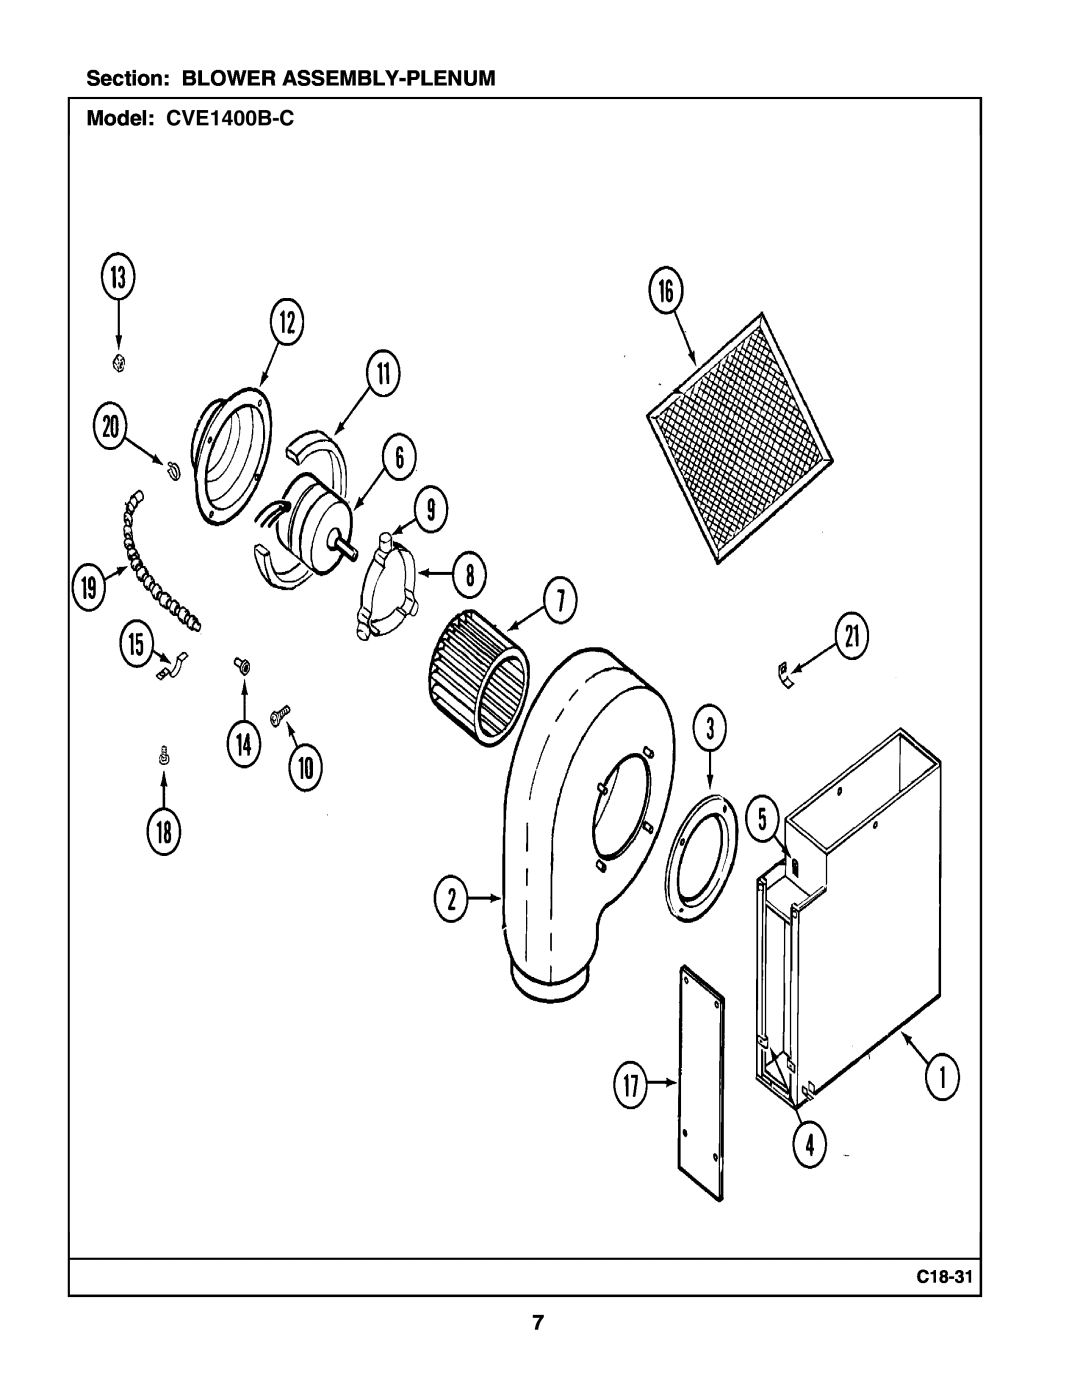 Whirlpool manual Section BLOWER ASSEMBLY-PLENUM Model CVE1400B-C, C18-31 